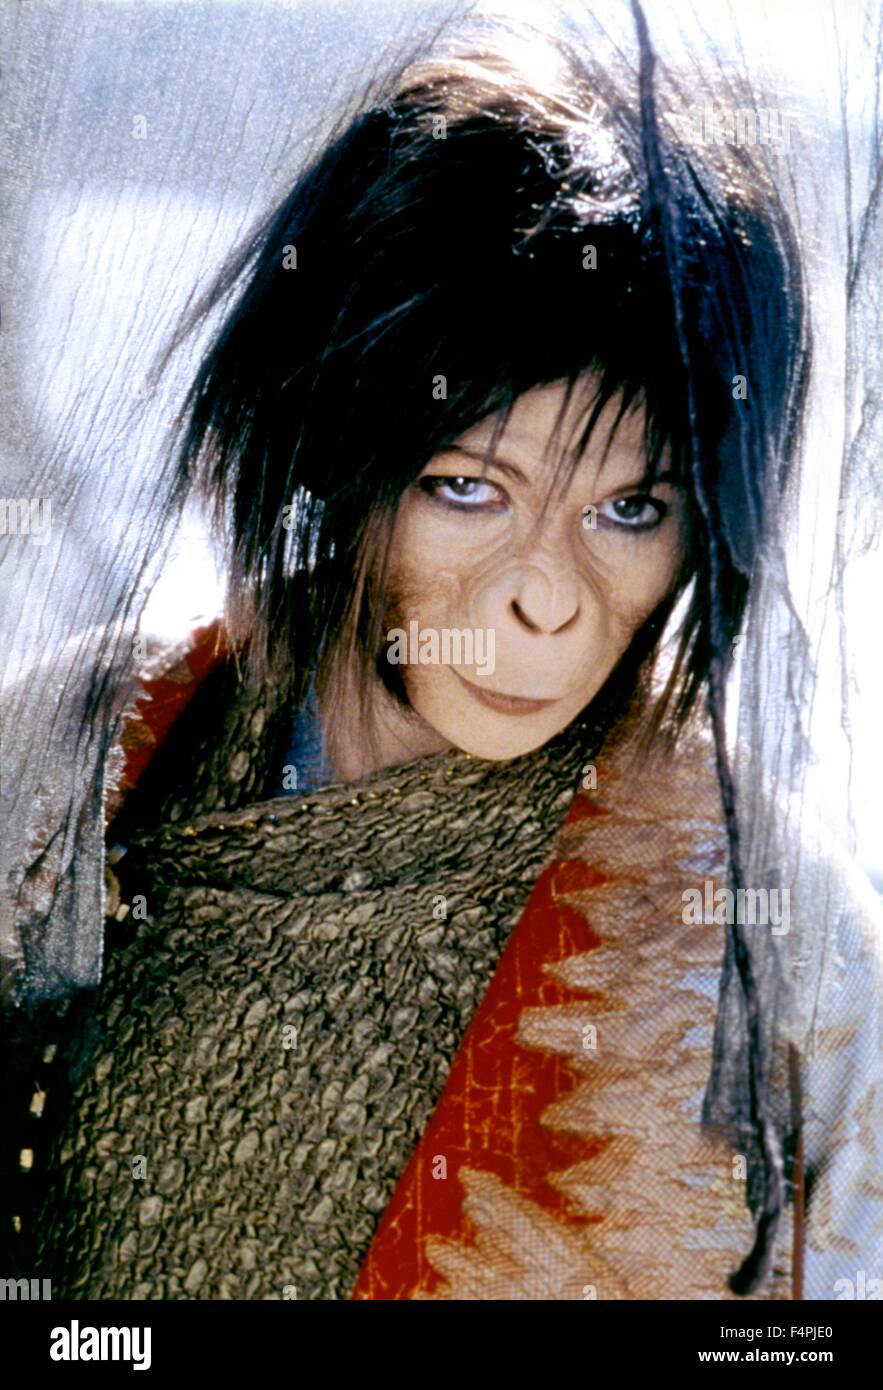 Helena Bonhan-Carter / Planet of the Apes / 2001 directed by Tim Burton [Twentieth Century Fox Film Corpo] Stock Photo